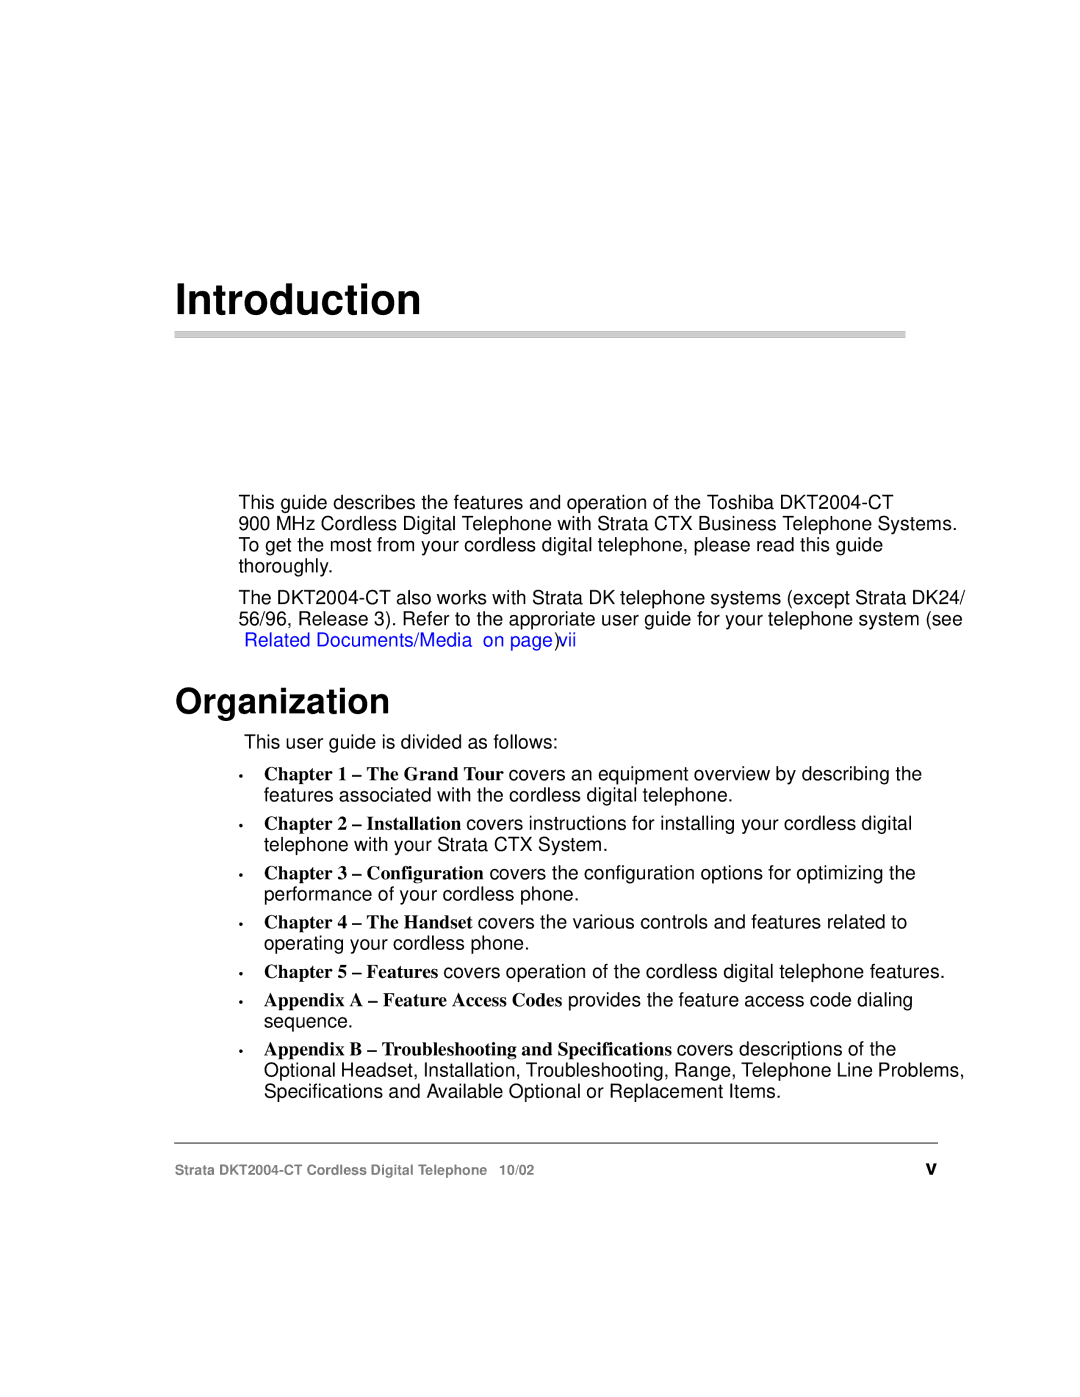 Toshiba DKT2004-CT manual Introduction, Organization 